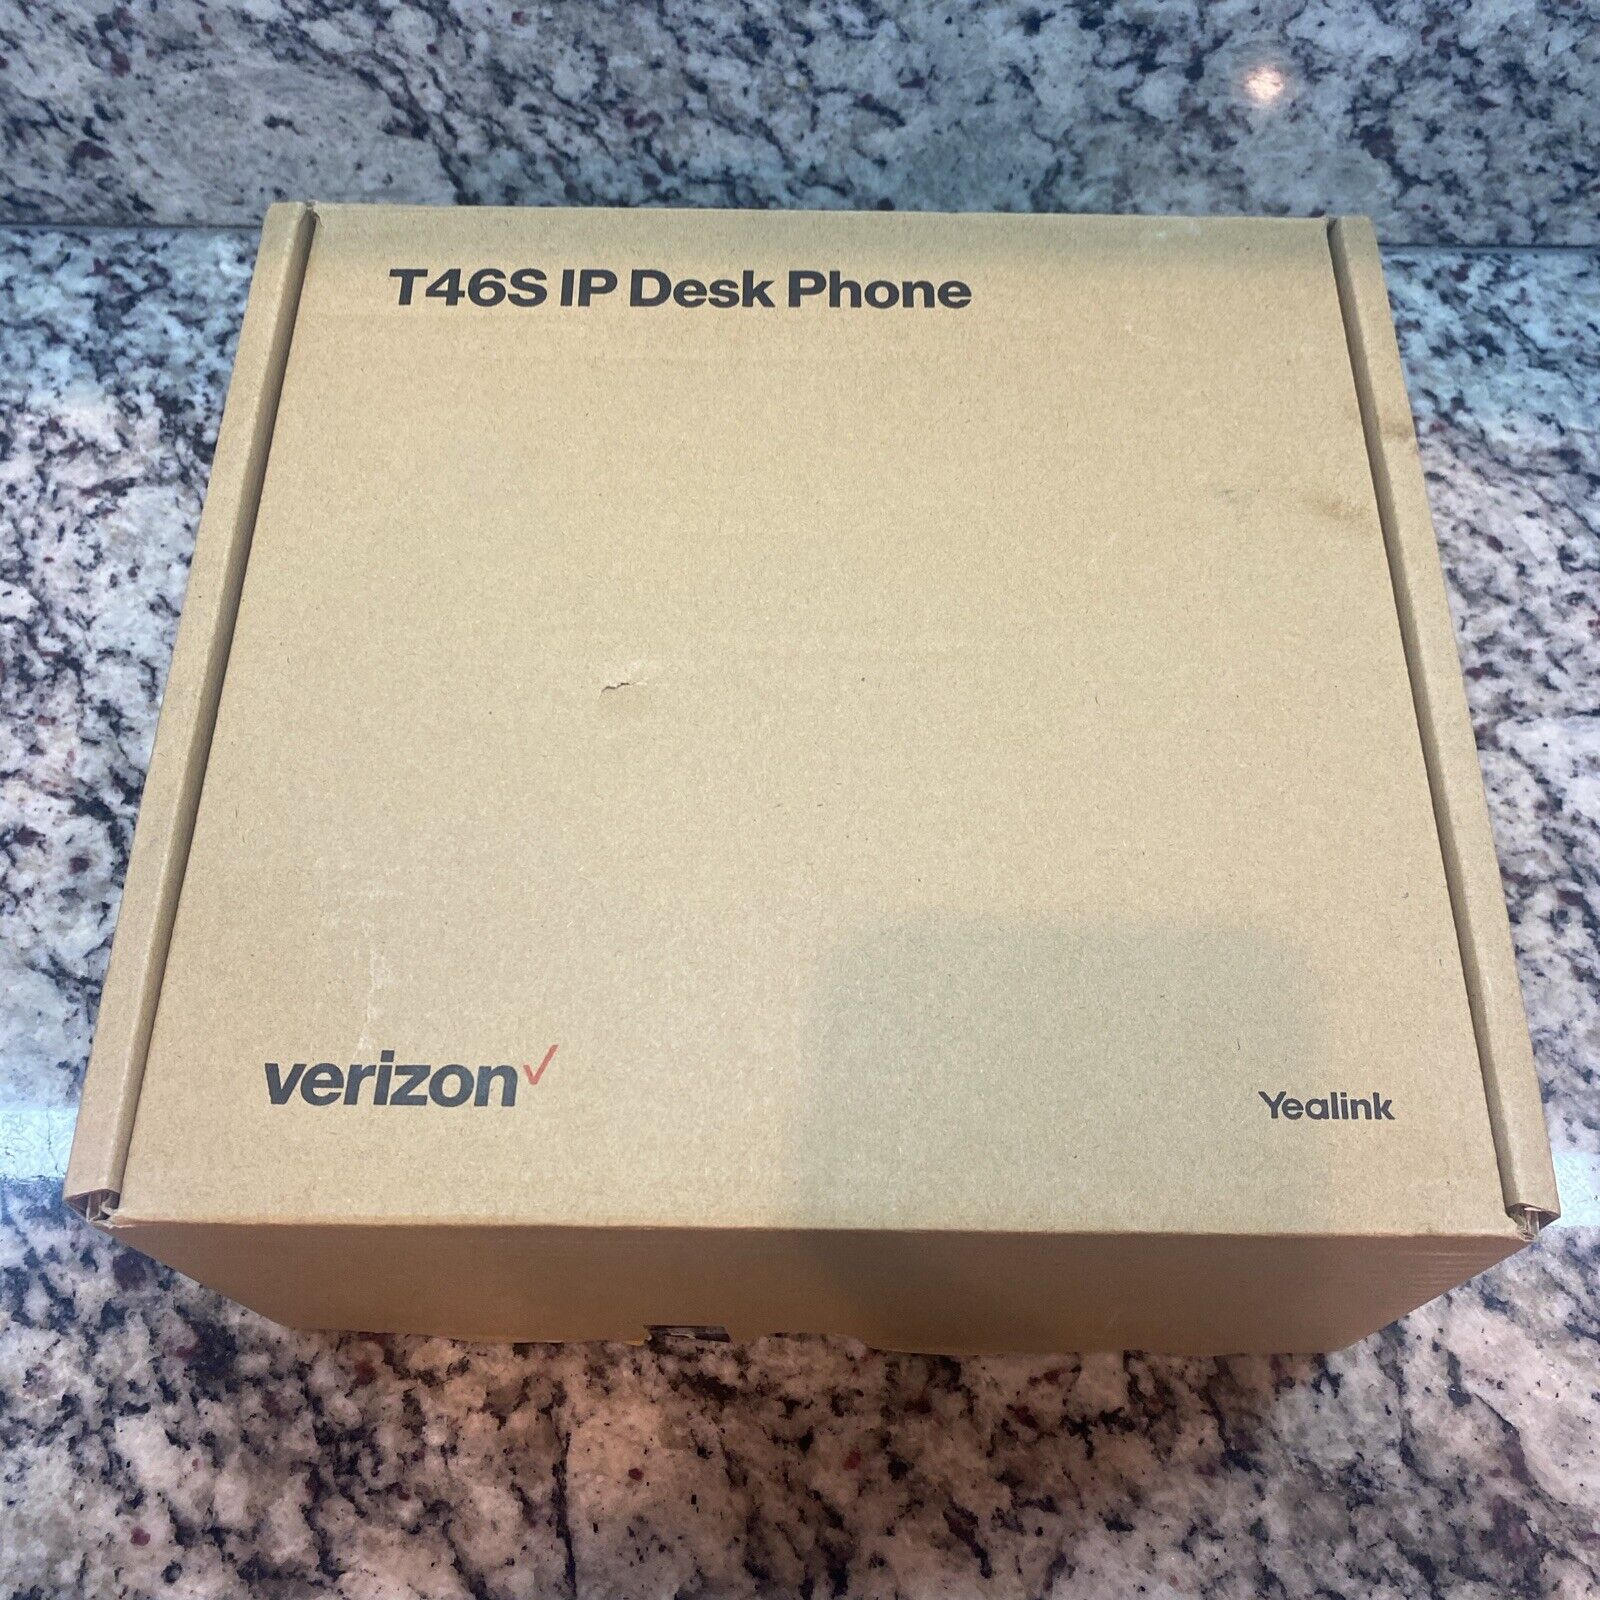 Yealink Verizon T46S-IP Desk Phone Bluetooth Ready (New Open Box)